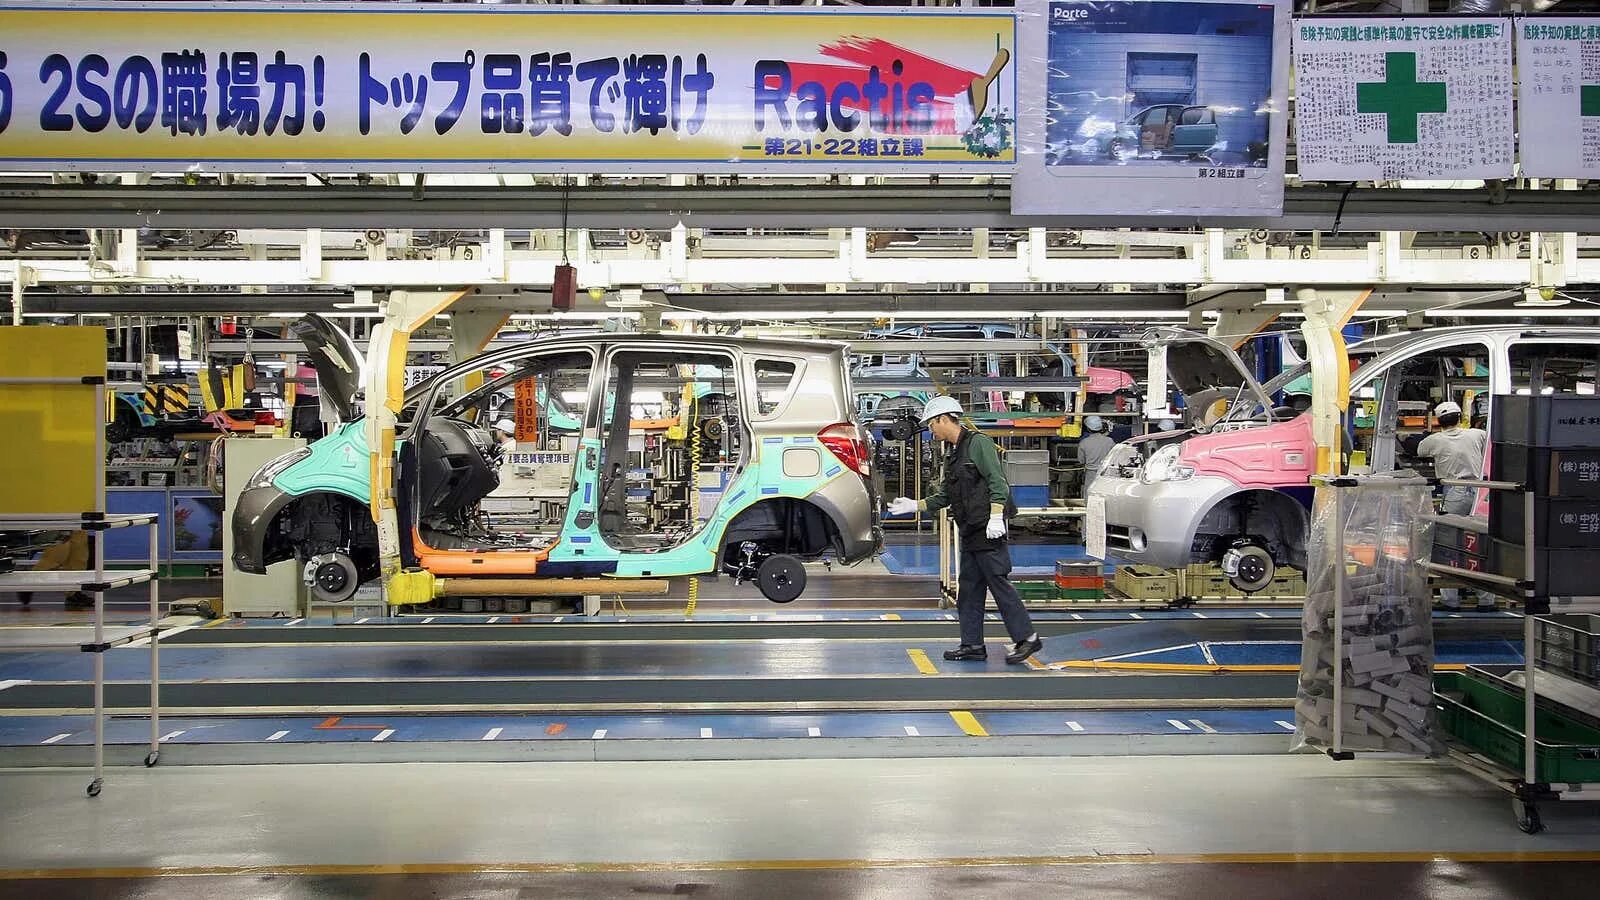 Завод Toyota в Японии. Автозавод Тойота в Японии. Японский автоконцерн Toyota Motor. Завод Тойота в Японии 2004.